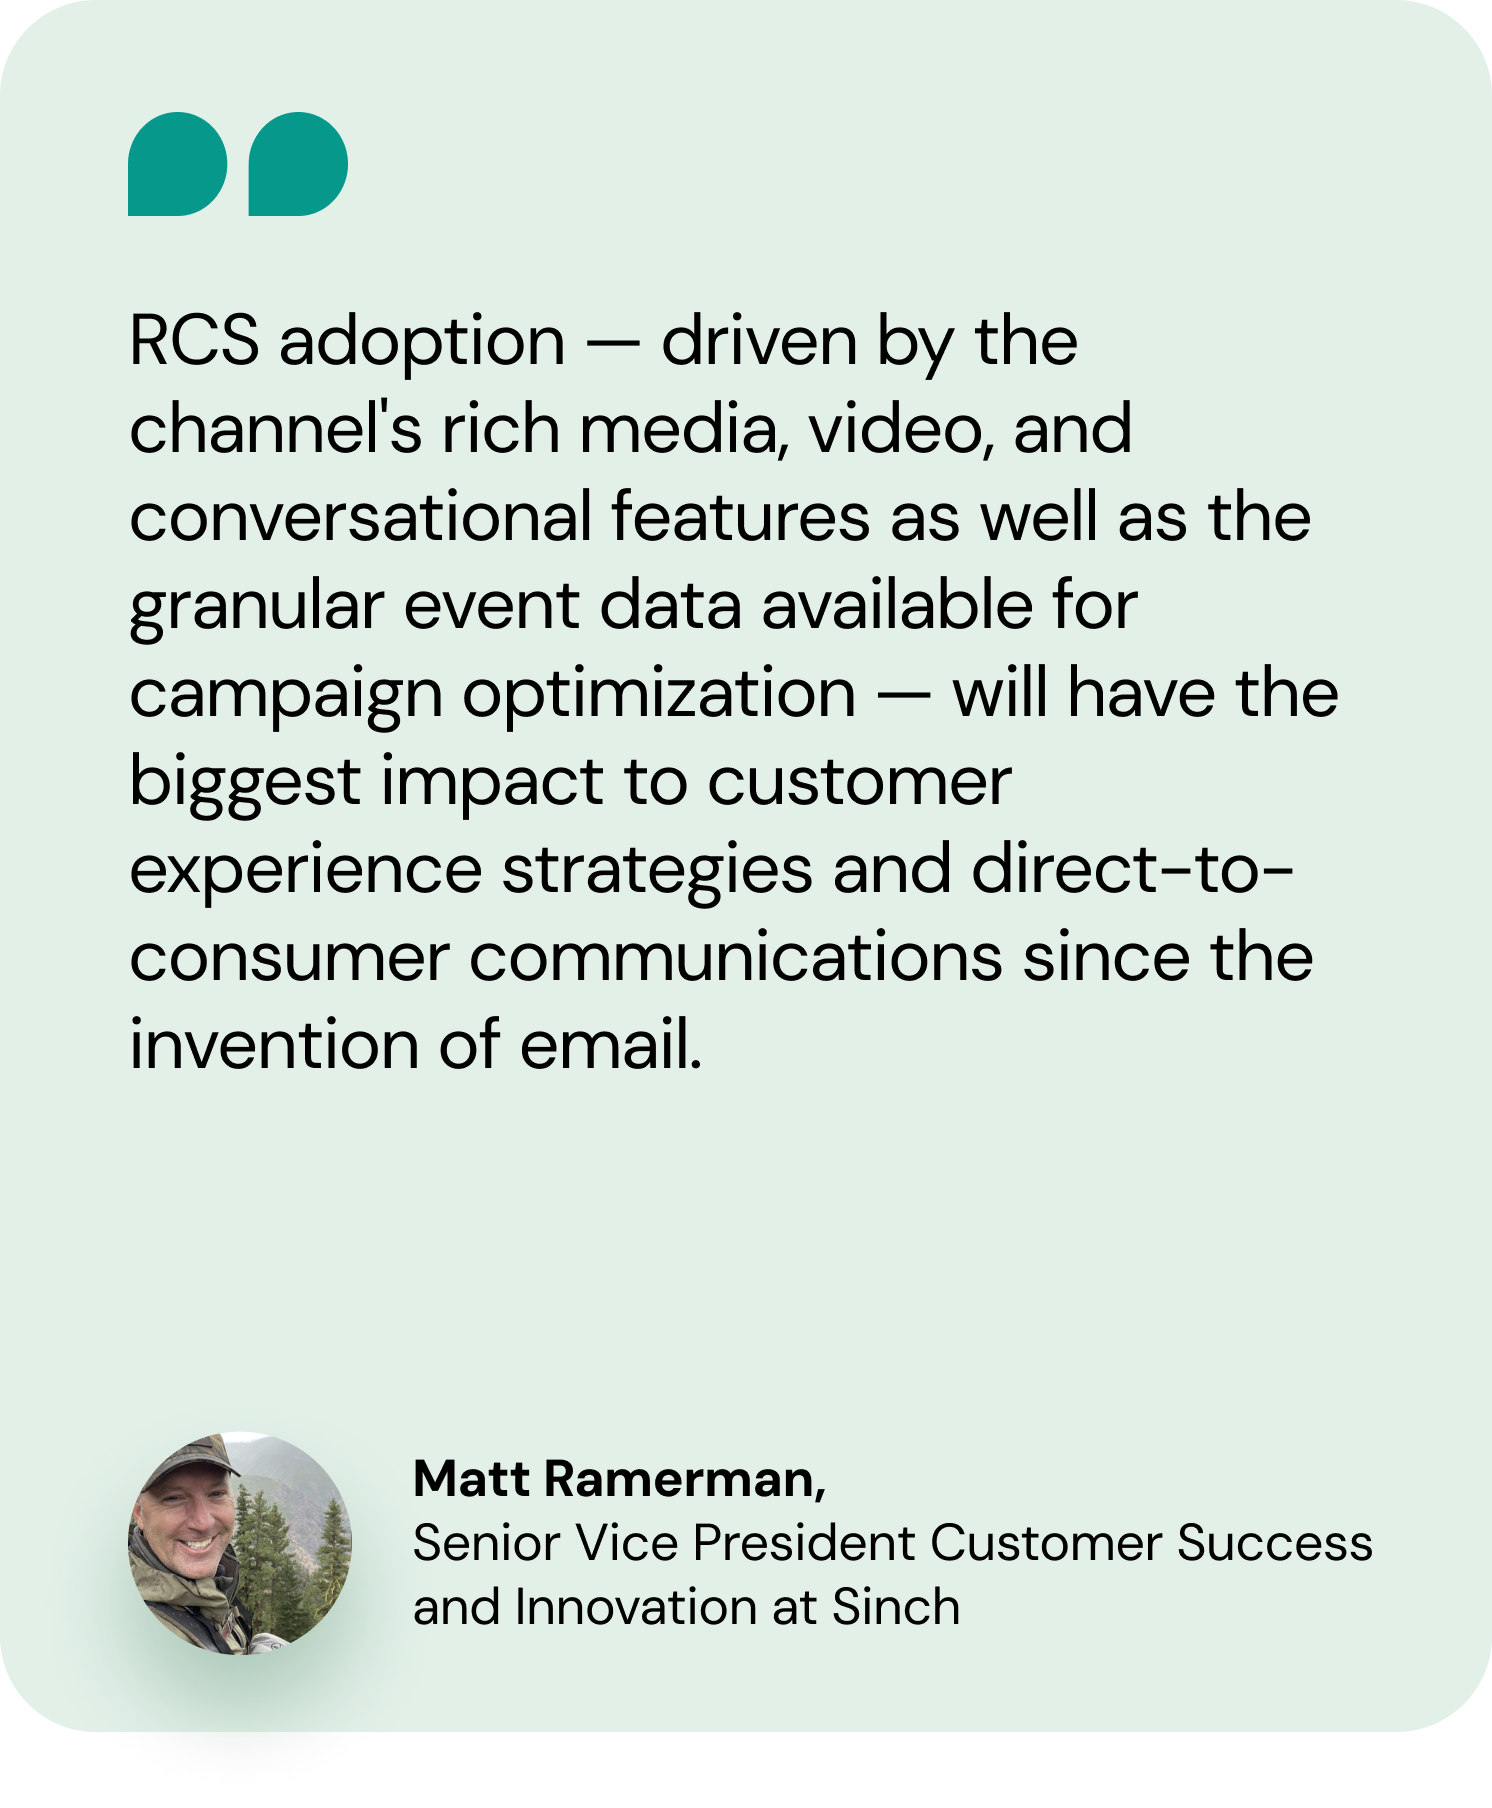 Matt Ramermann Sinch quote on RCS adoption